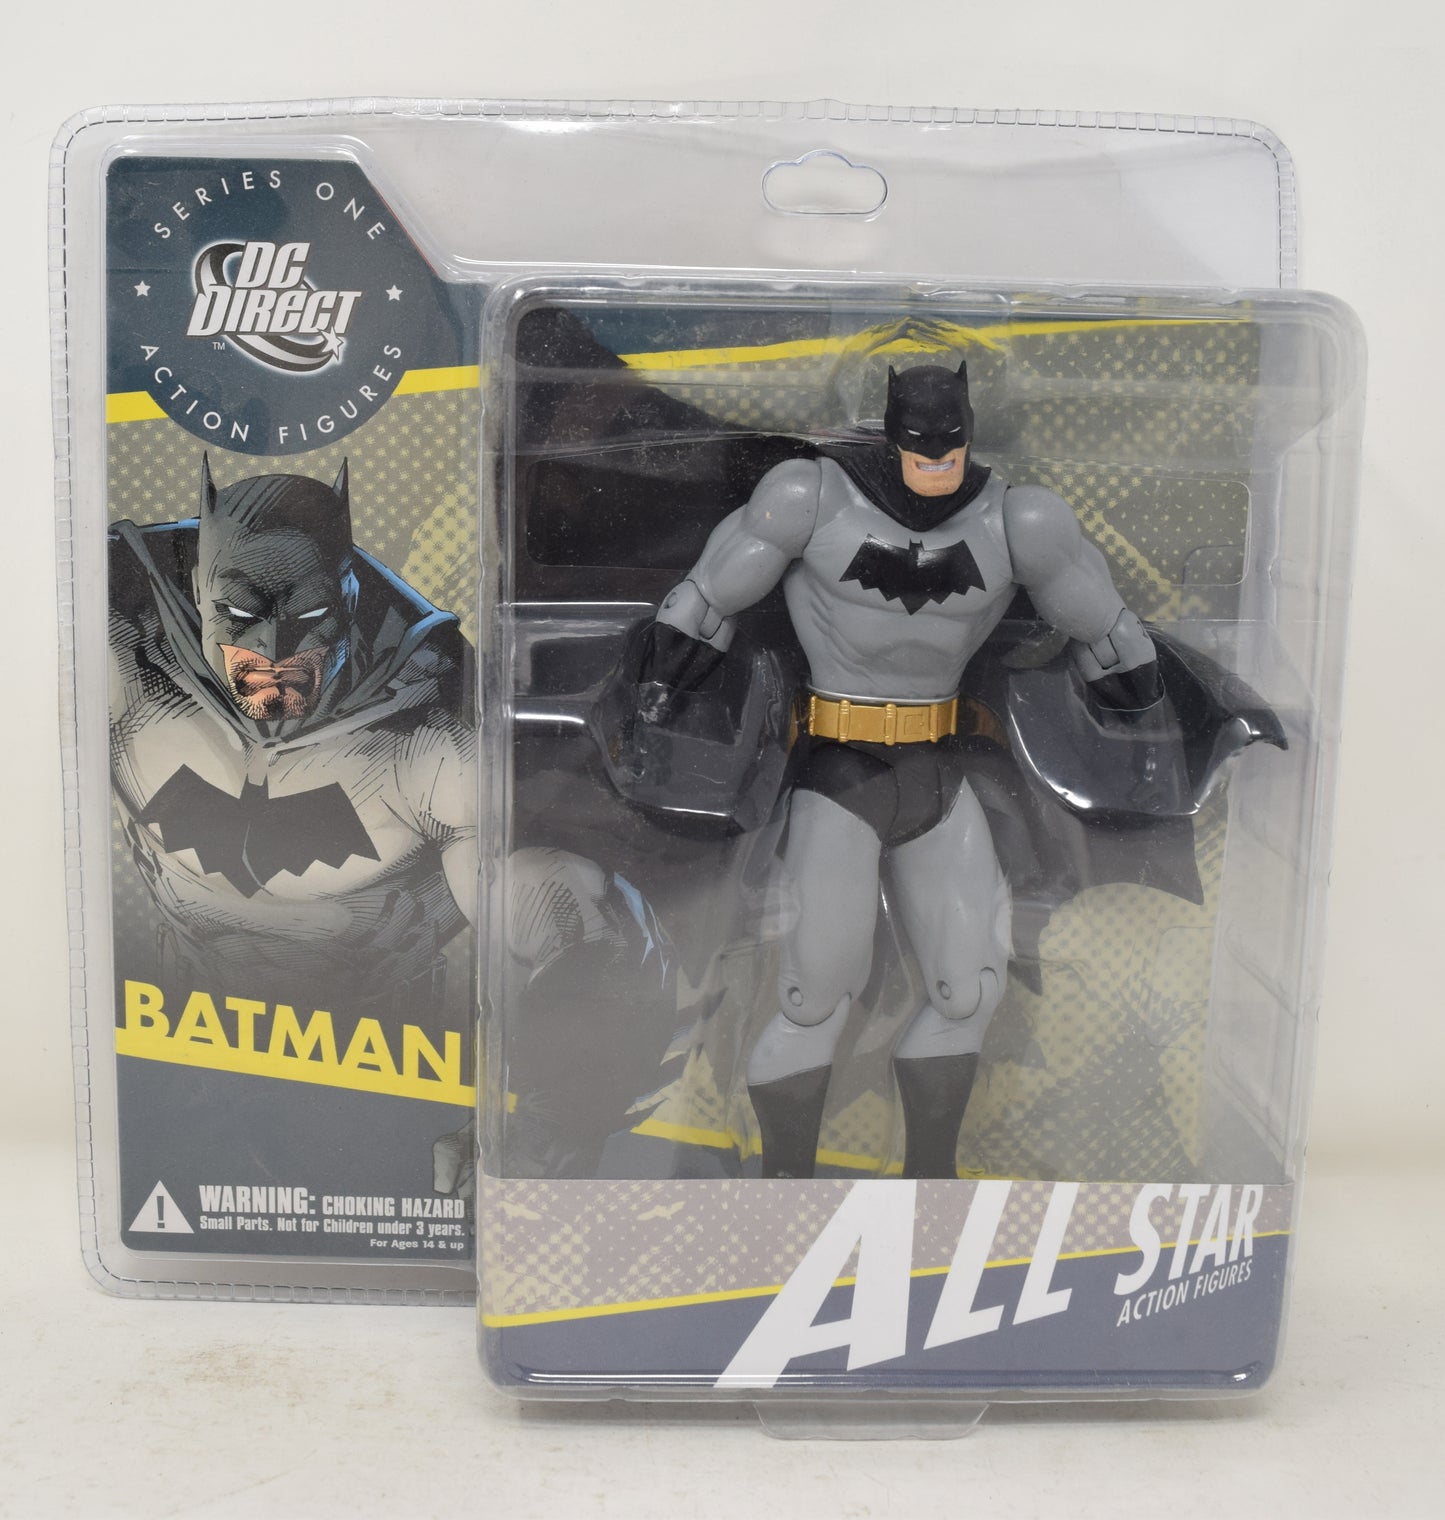 Batman All Star Action Figure DC Direct MOC New